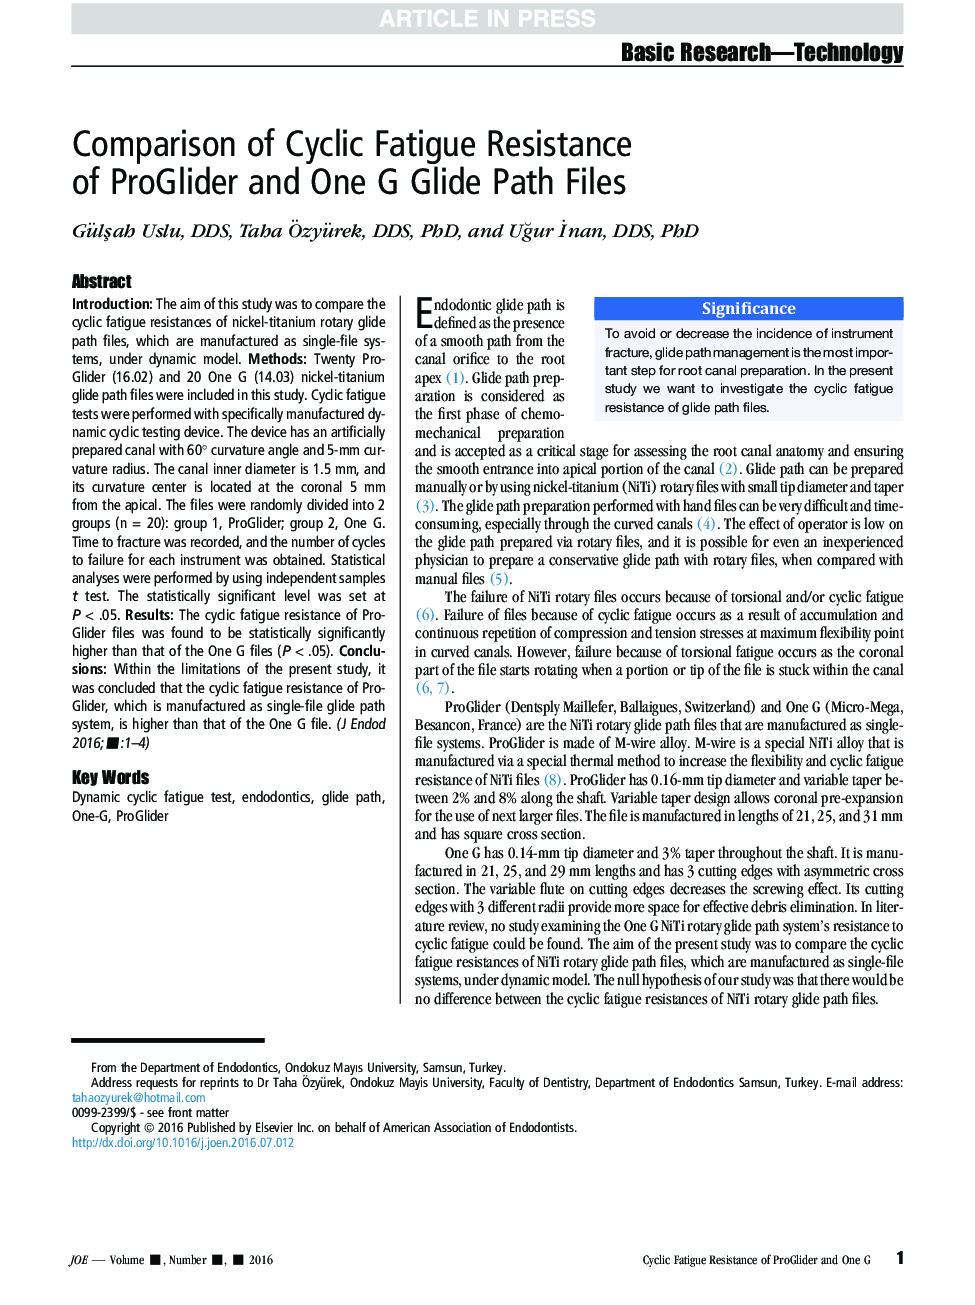 Comparison of Cyclic Fatigue Resistance of ProGlider and One G Glide Path Files